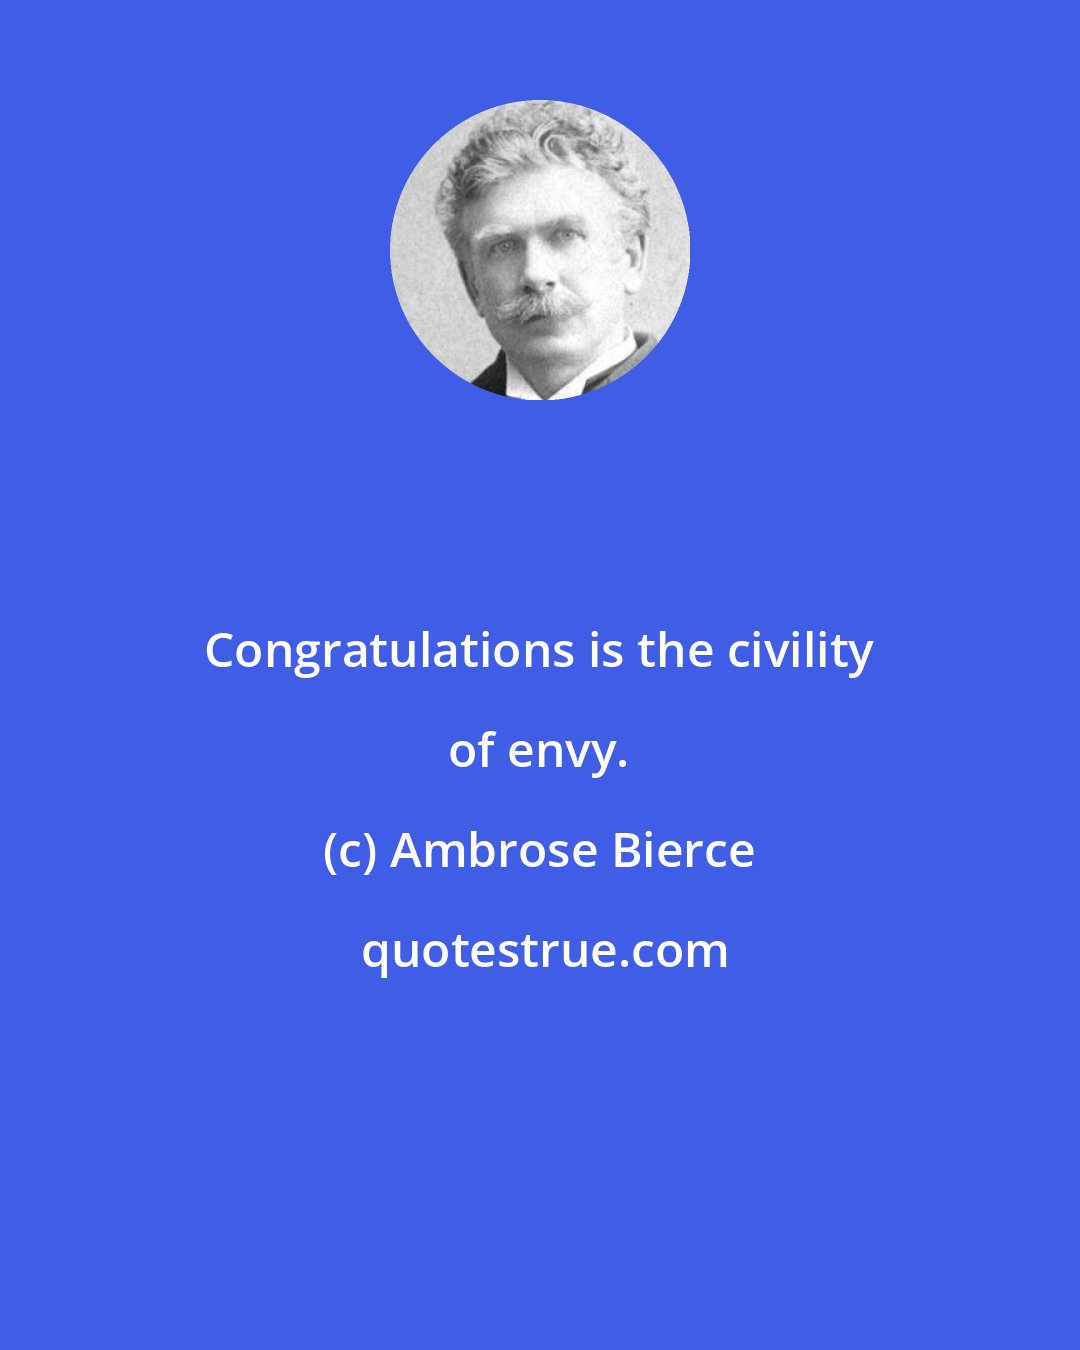 Ambrose Bierce: Congratulations is the civility of envy.